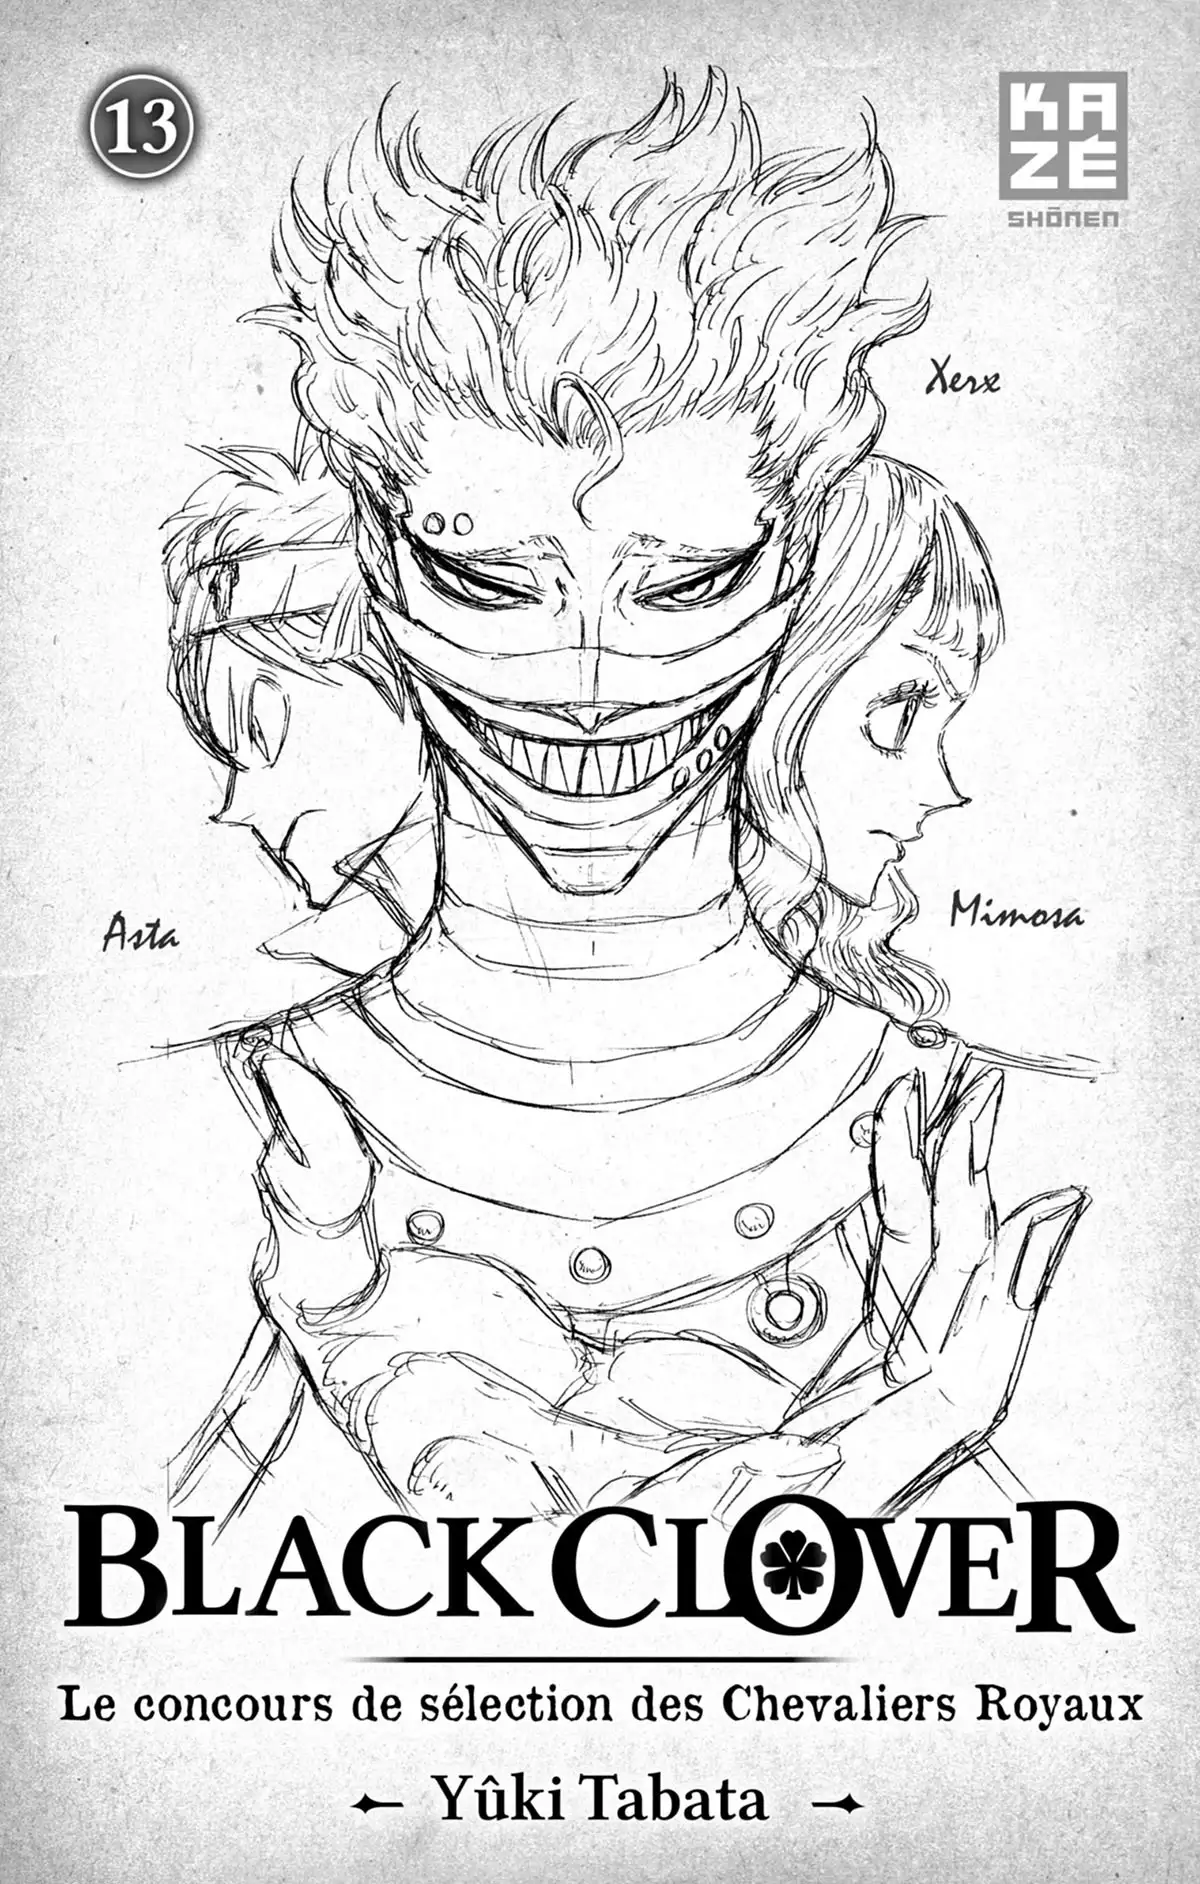 Black Clover Volume 13 page 2